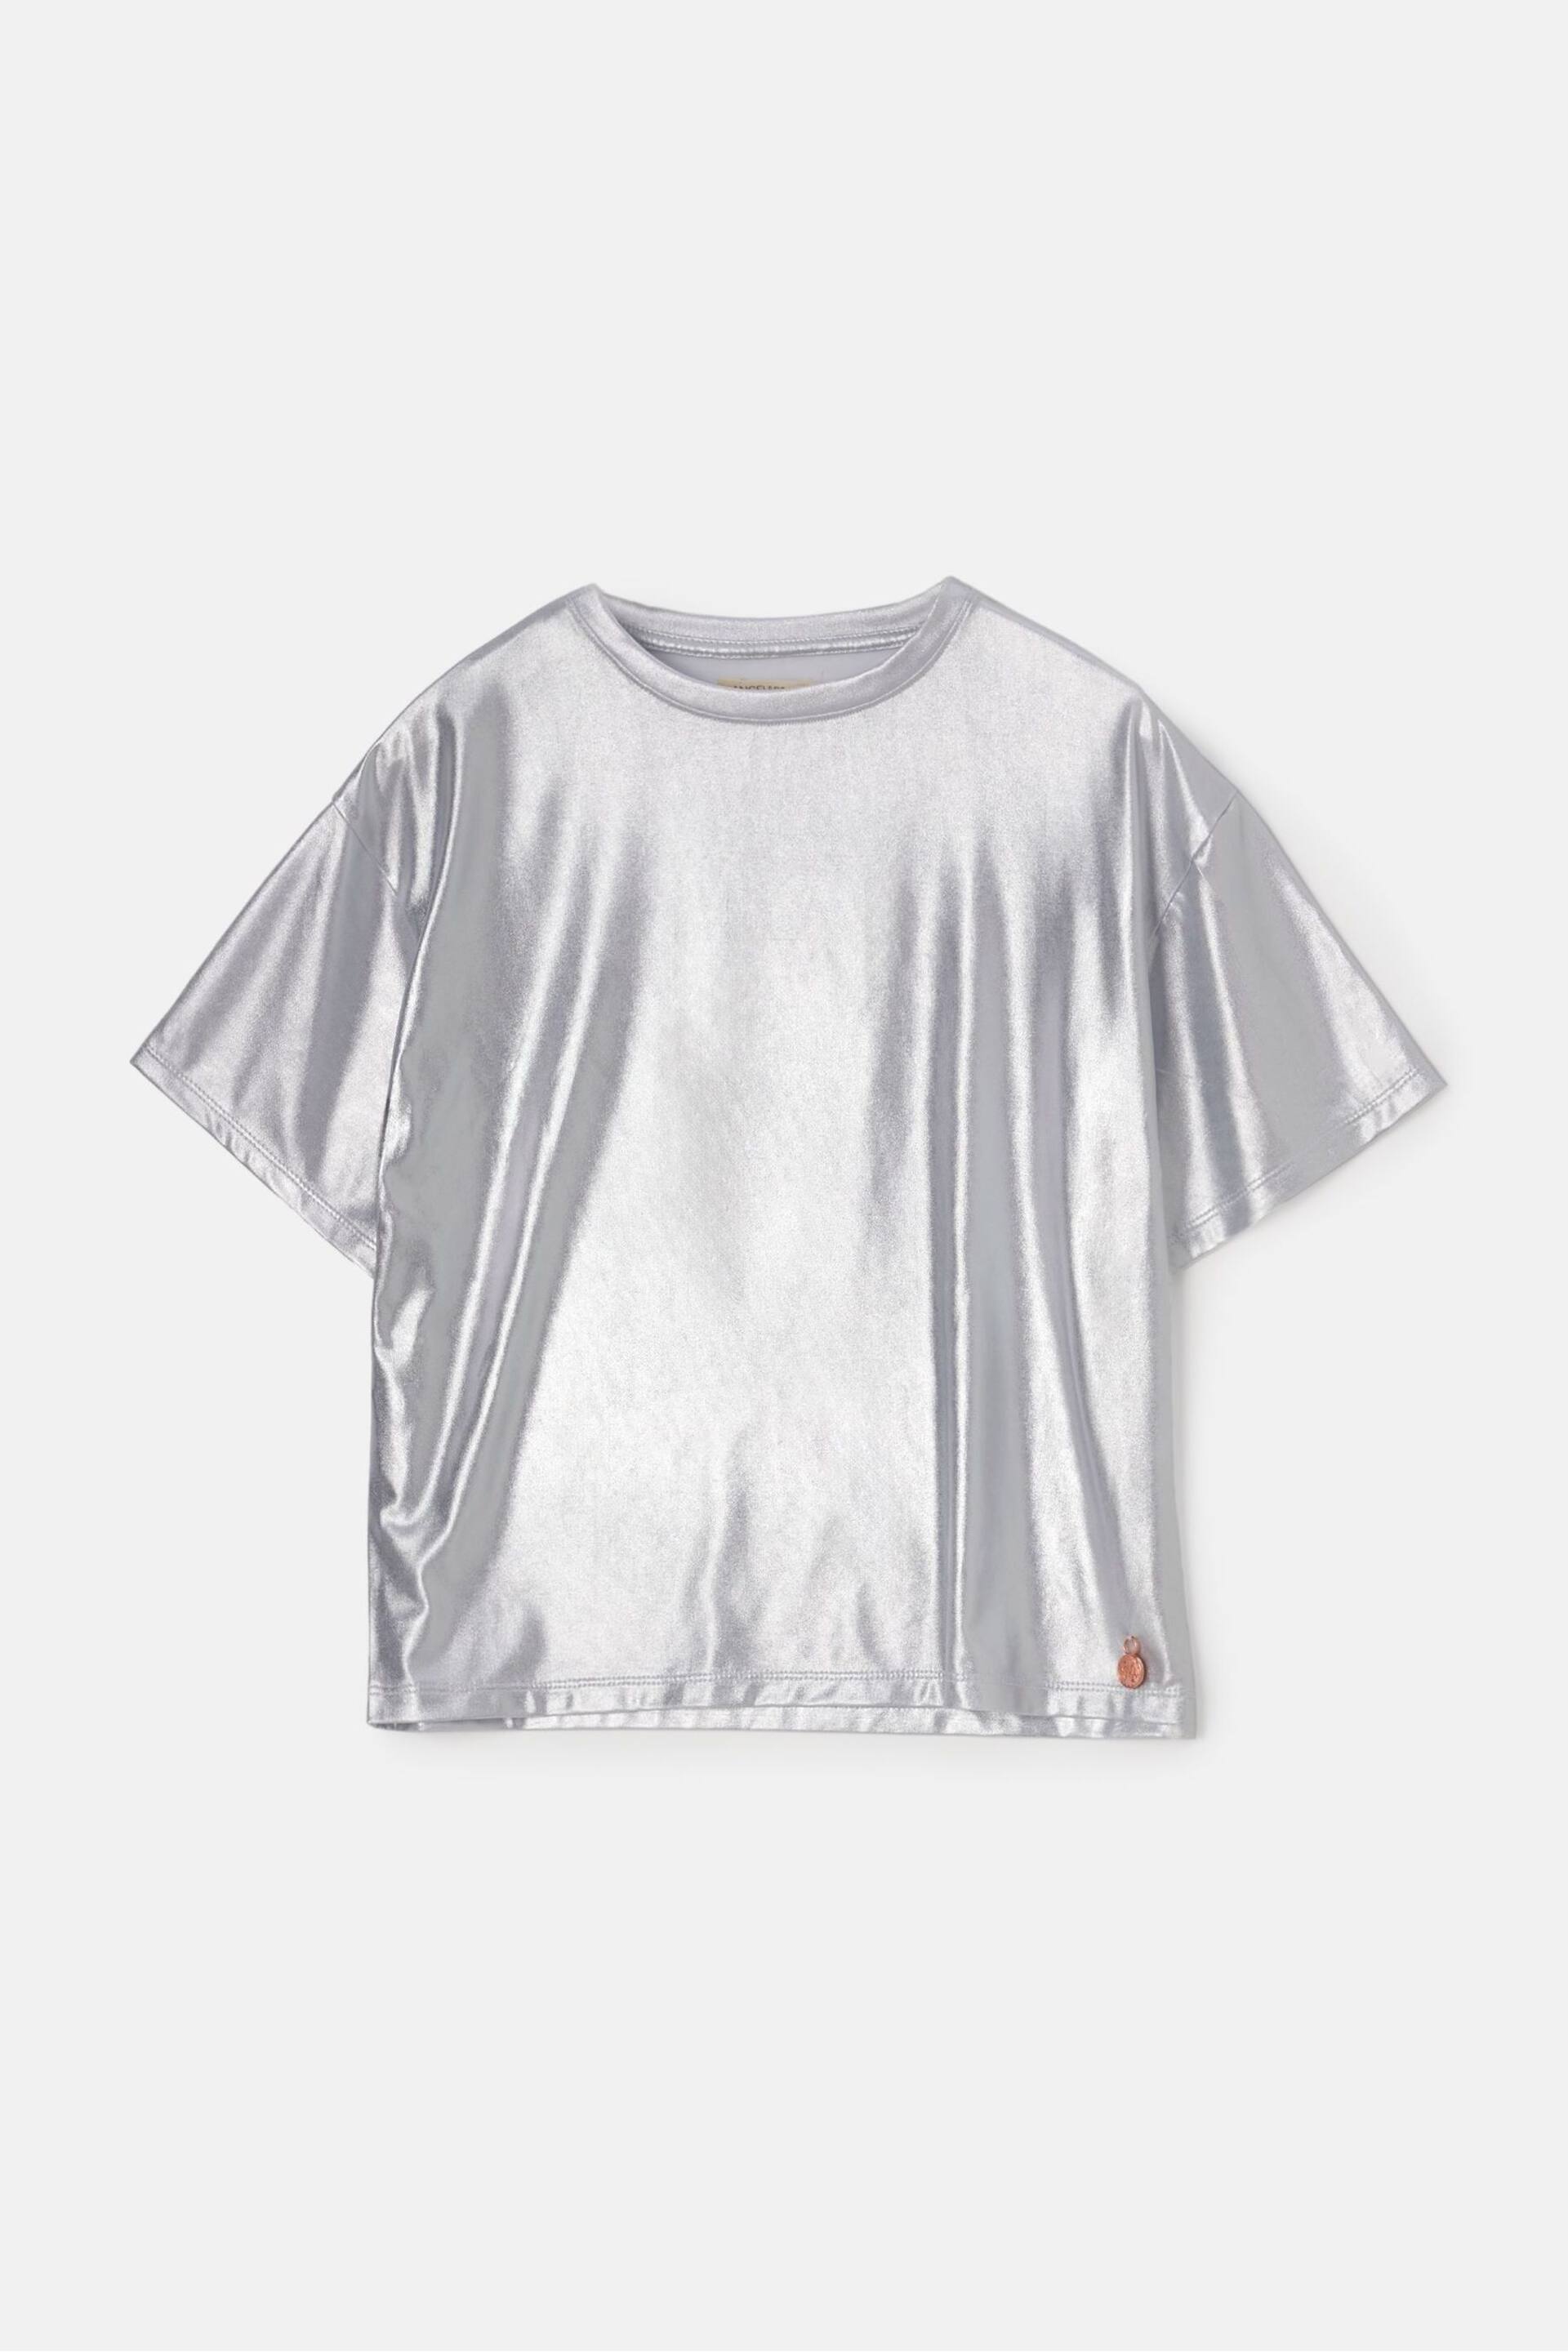 Angel & Rocket Silver Luna Jersey T-Shirt - Image 2 of 4